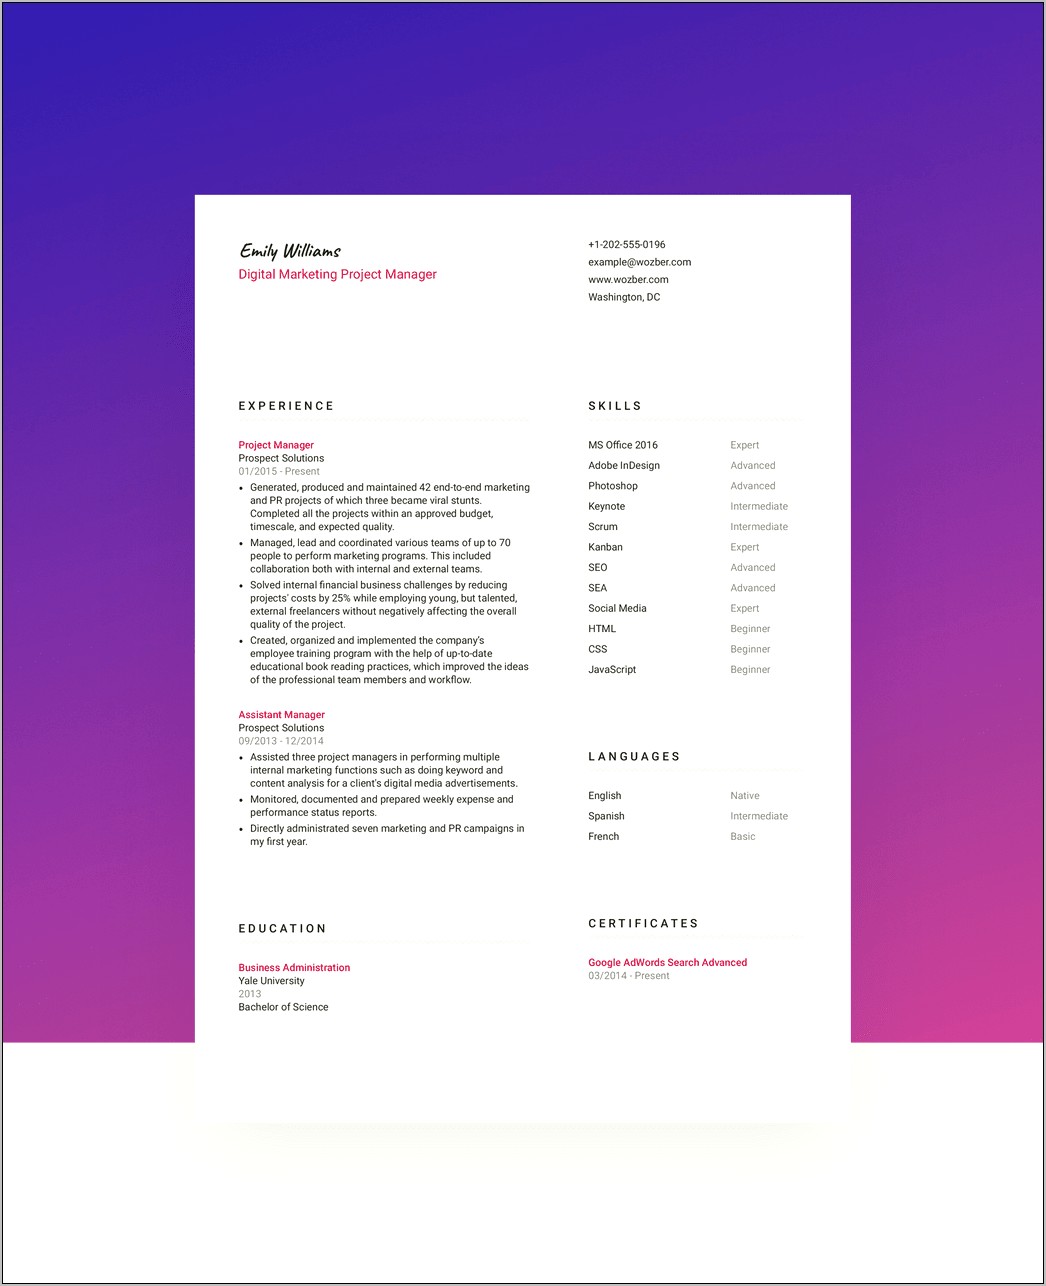 Sample Resume Site Pinterest.com